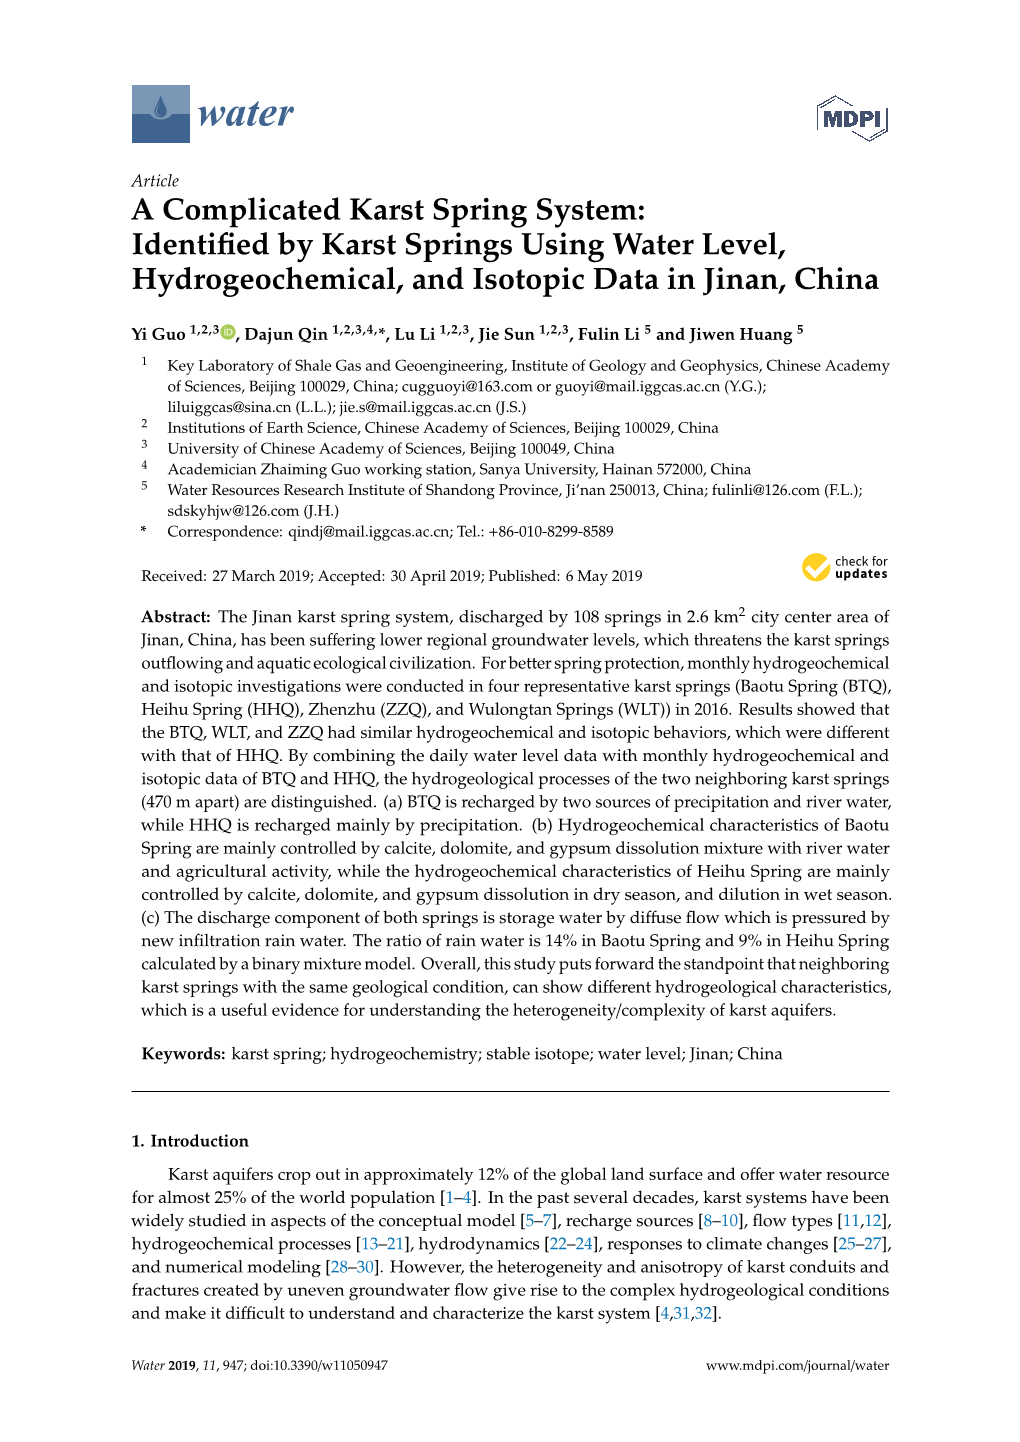 Identified by Karst Springs Using Water Level, Hydrogeochemical